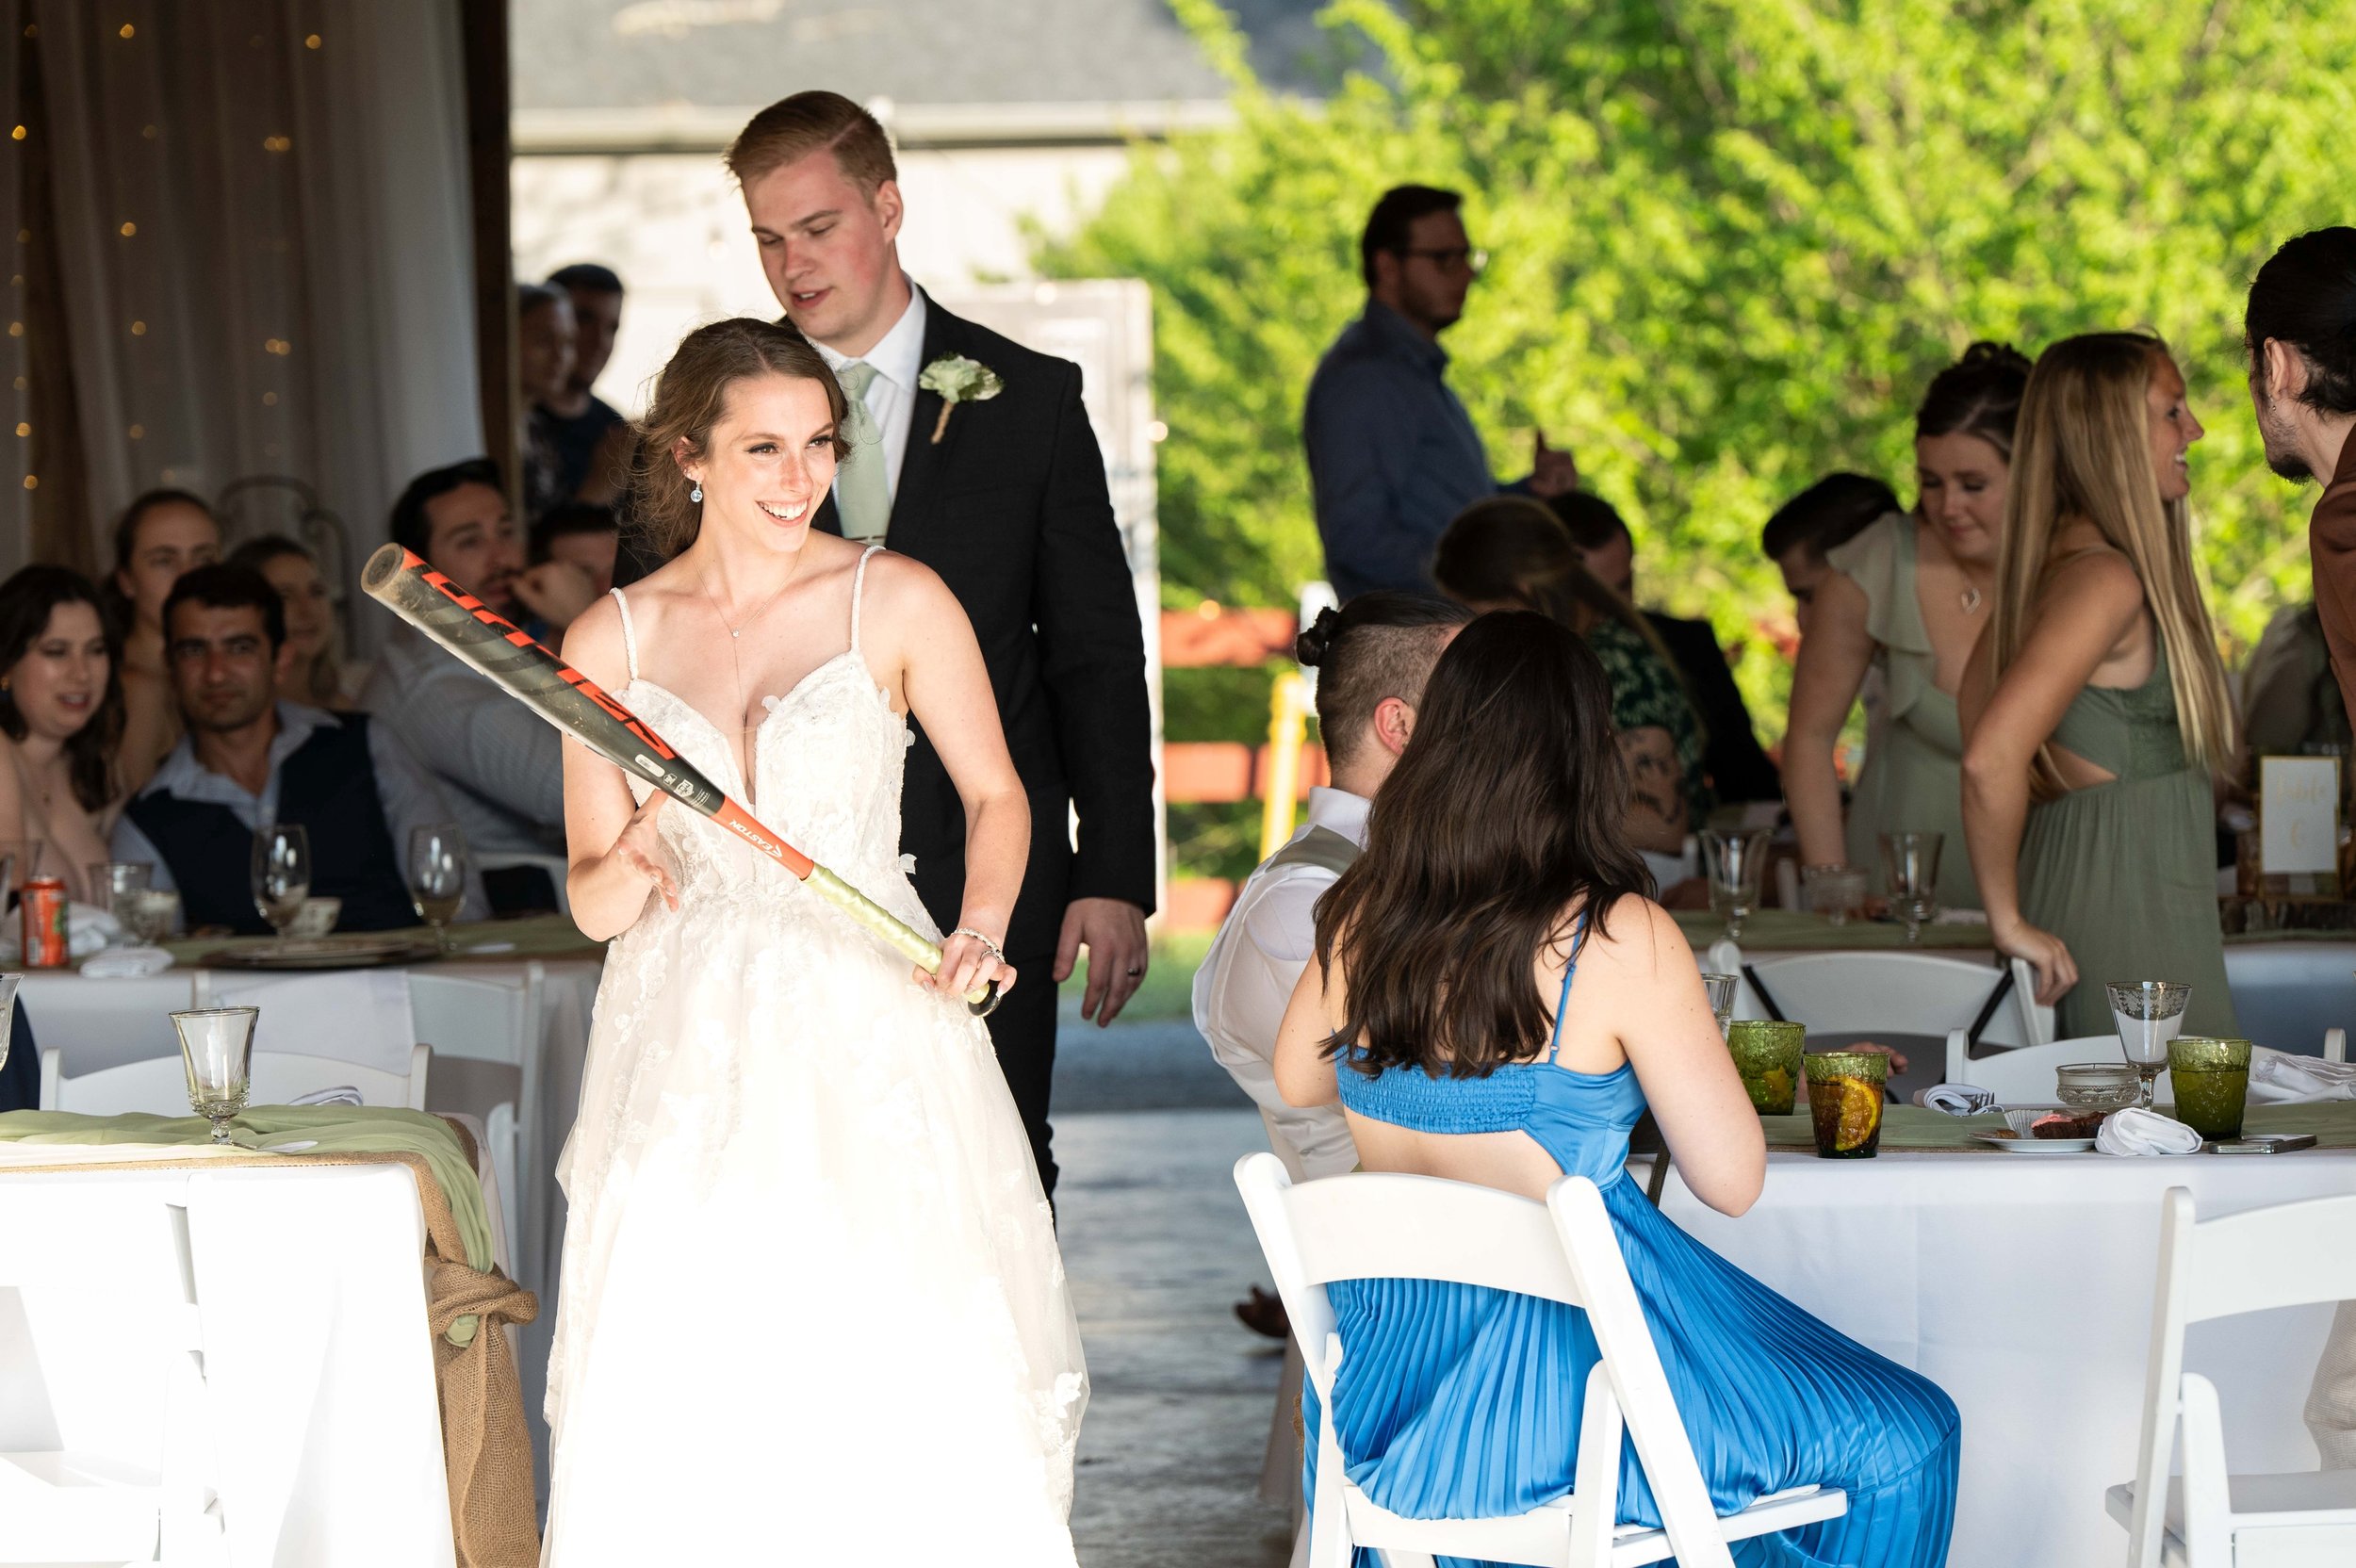 Outdoor April Wedding in Asheville North Carolina at Emerald Ridge Farm & Event Center blog 3 1.jpg